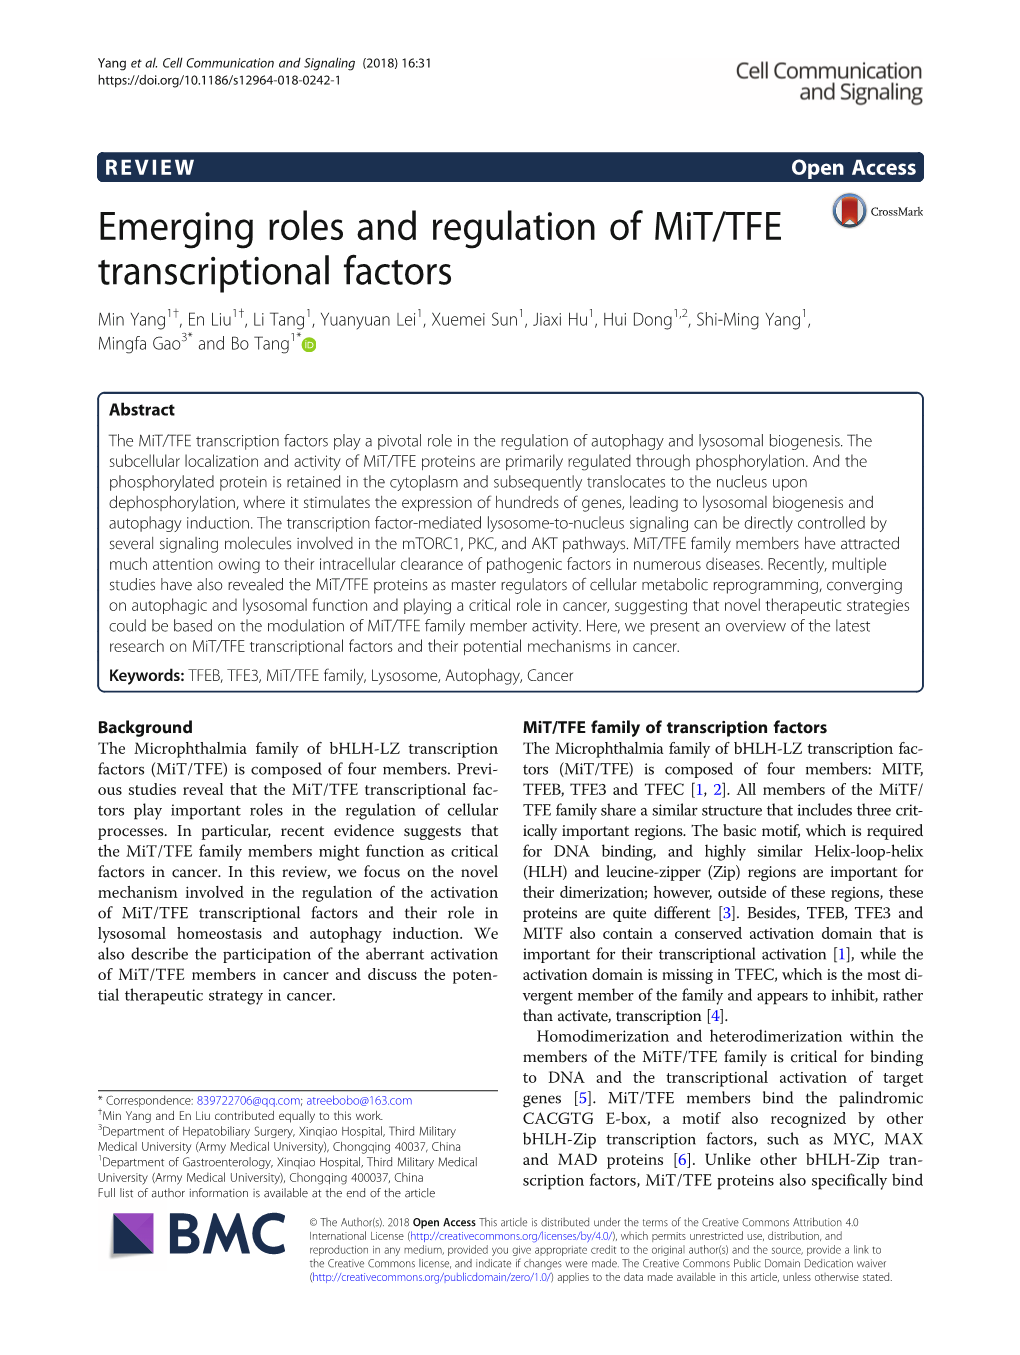 Emerging Roles and Regulation of Mit/TFE Transcriptional Factors